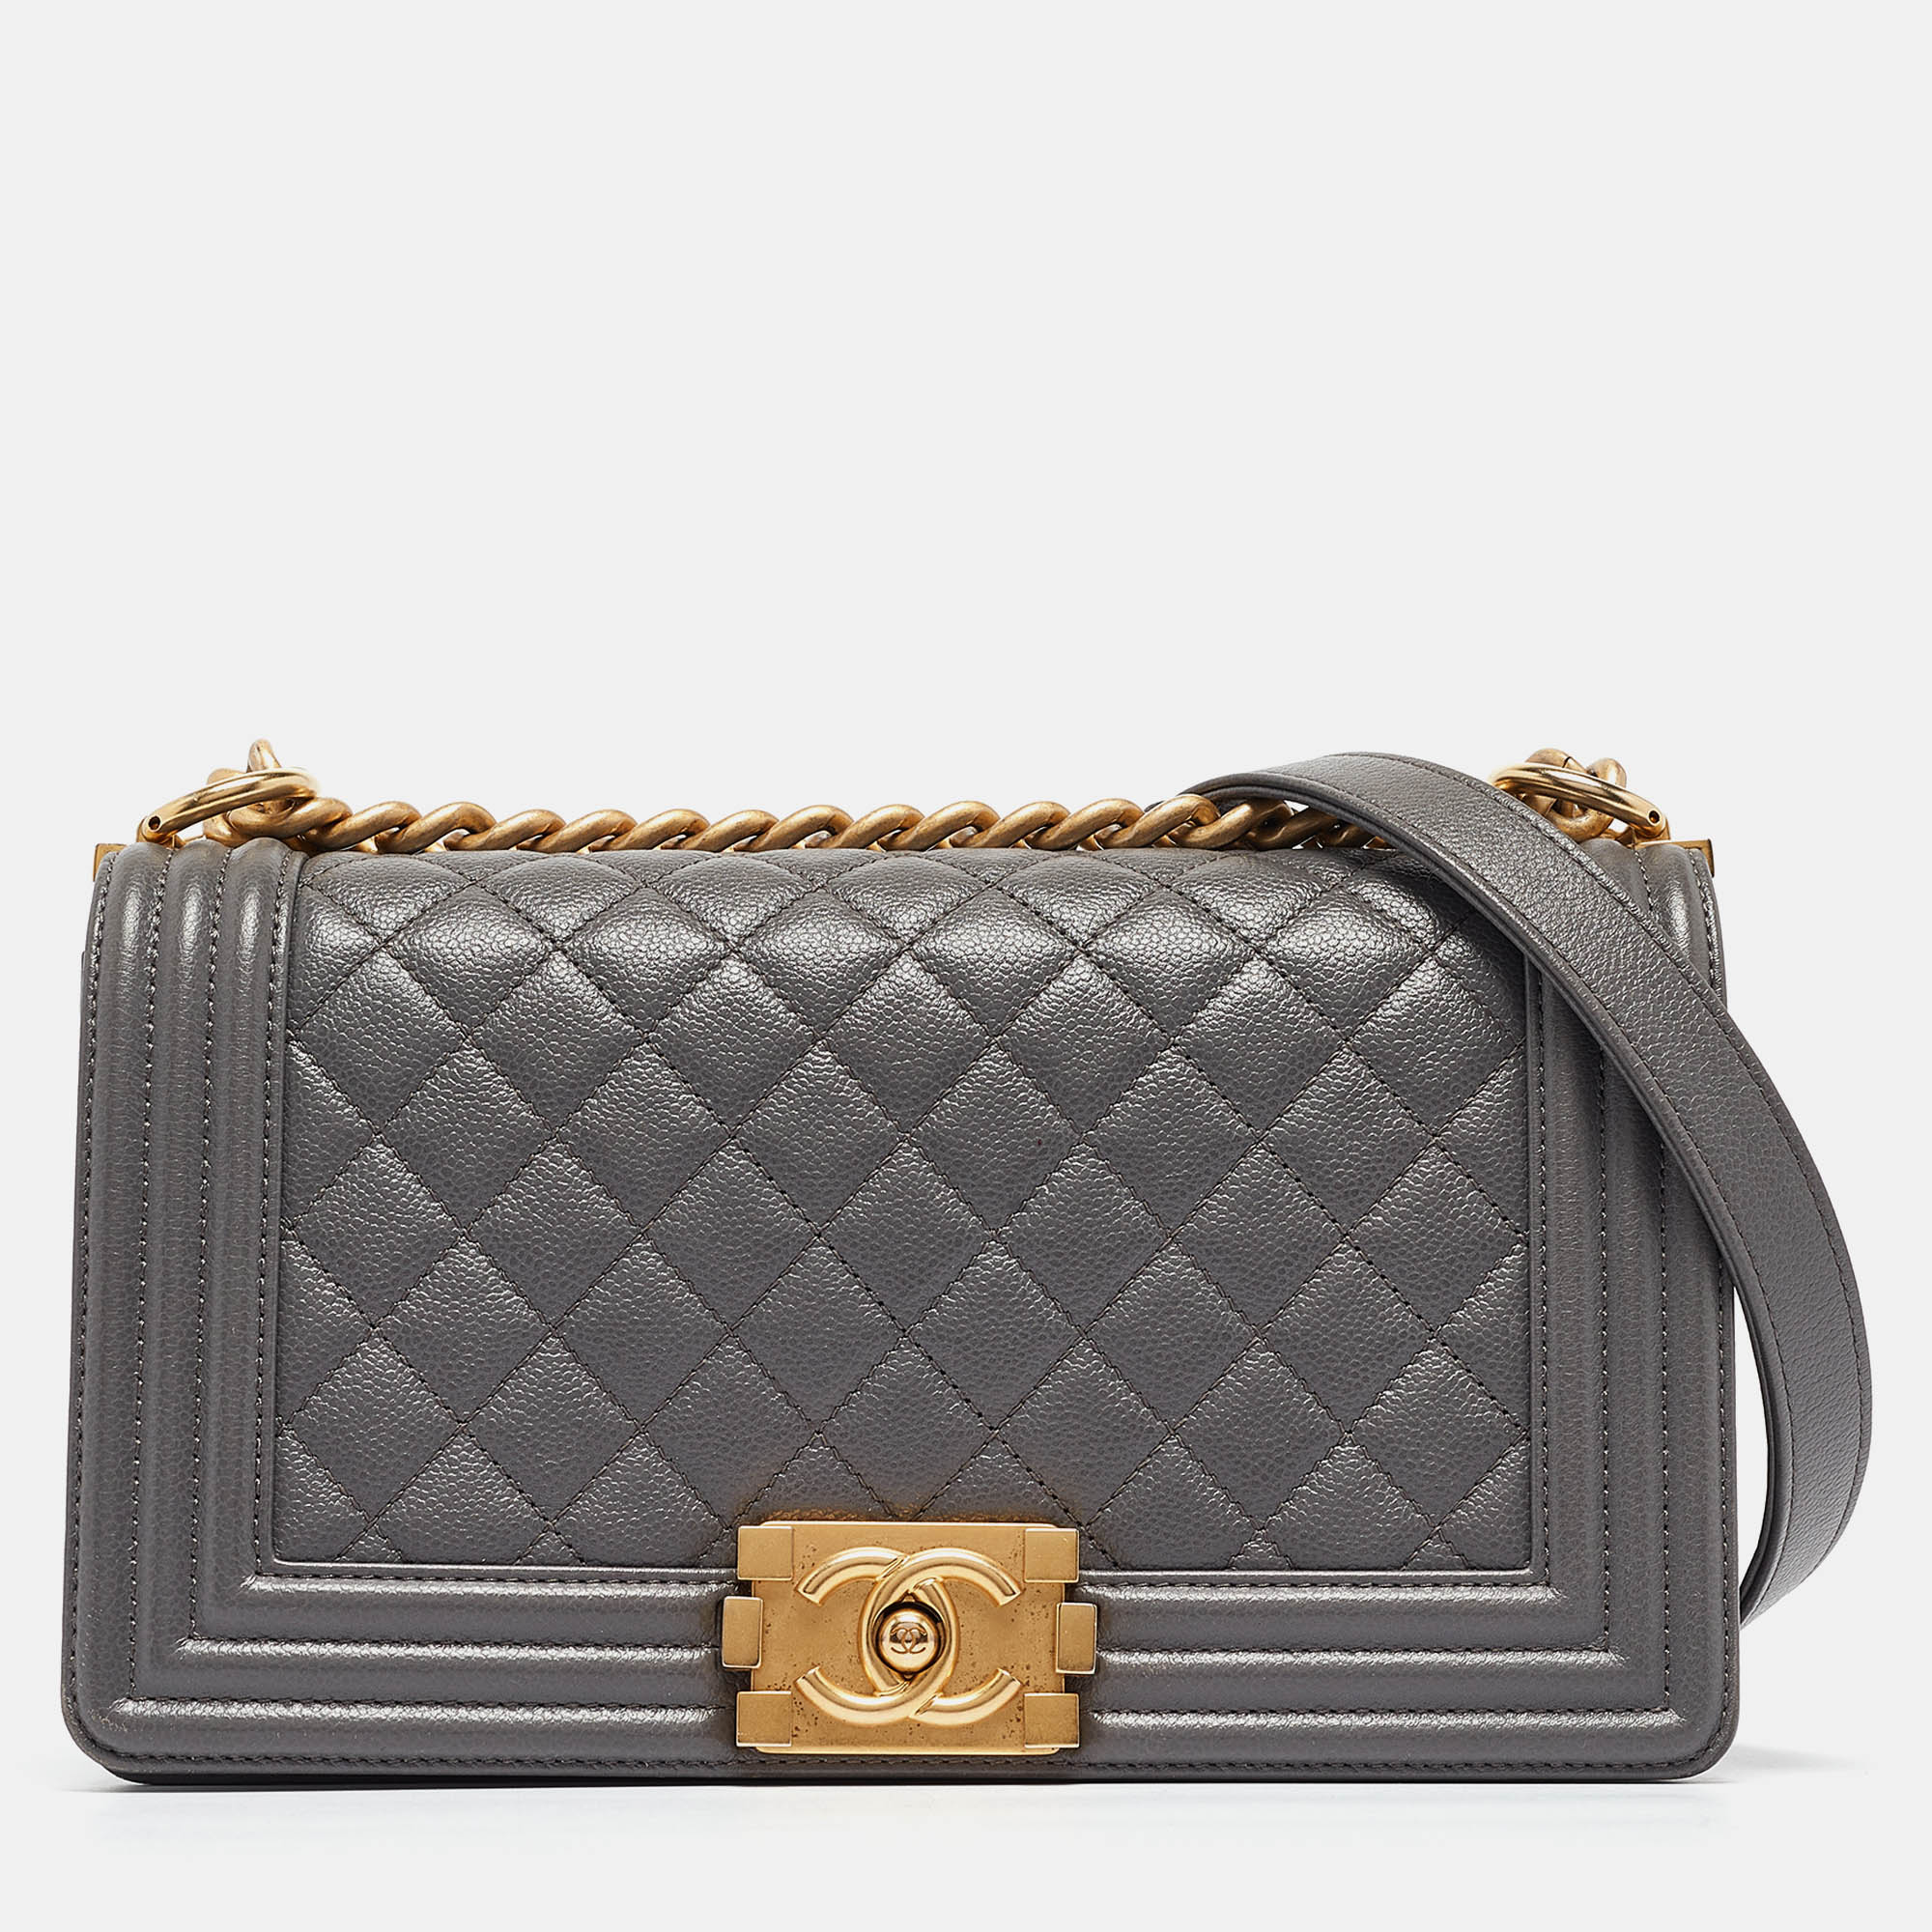 Chanel grey quilted caviar leather medium boy flap bag